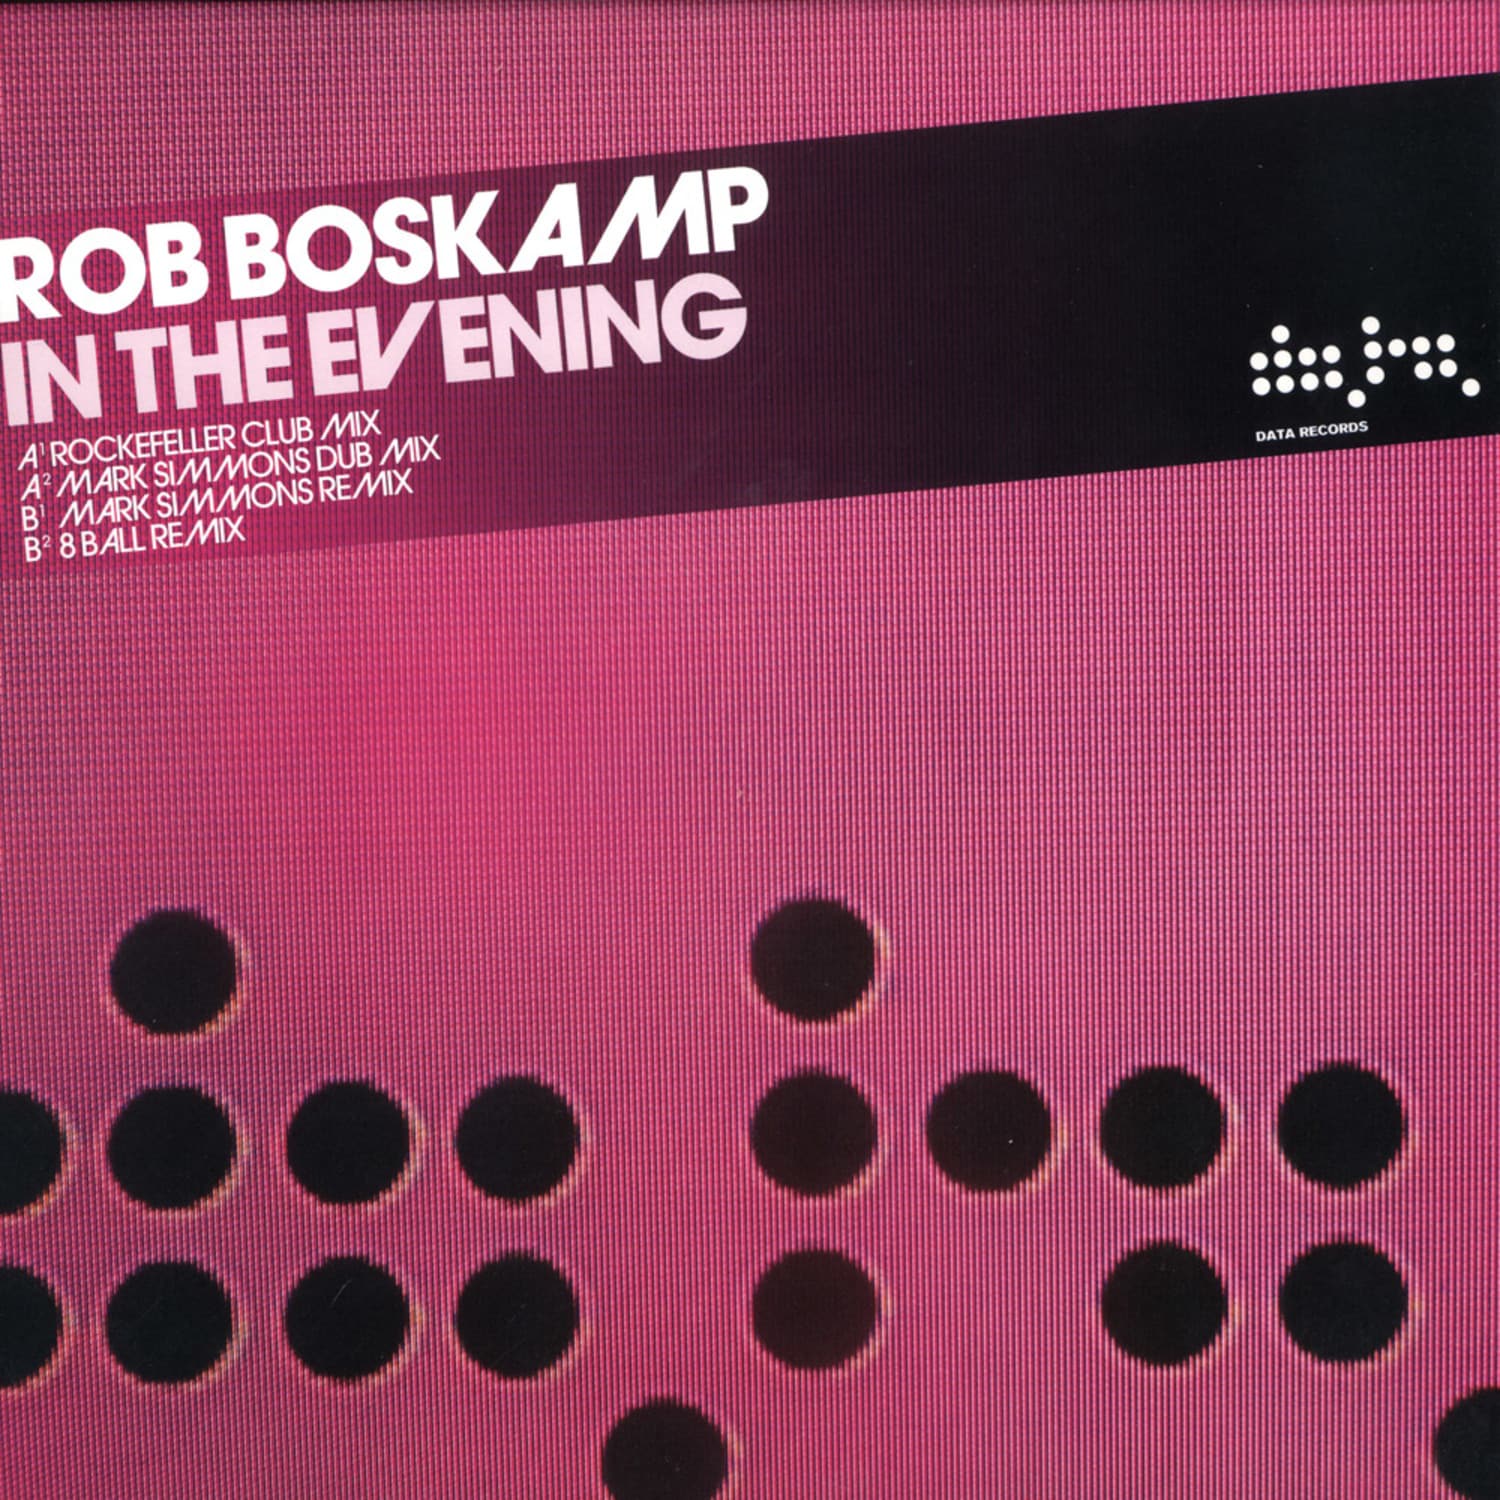 Rob Boskamp - IN THE EVENING